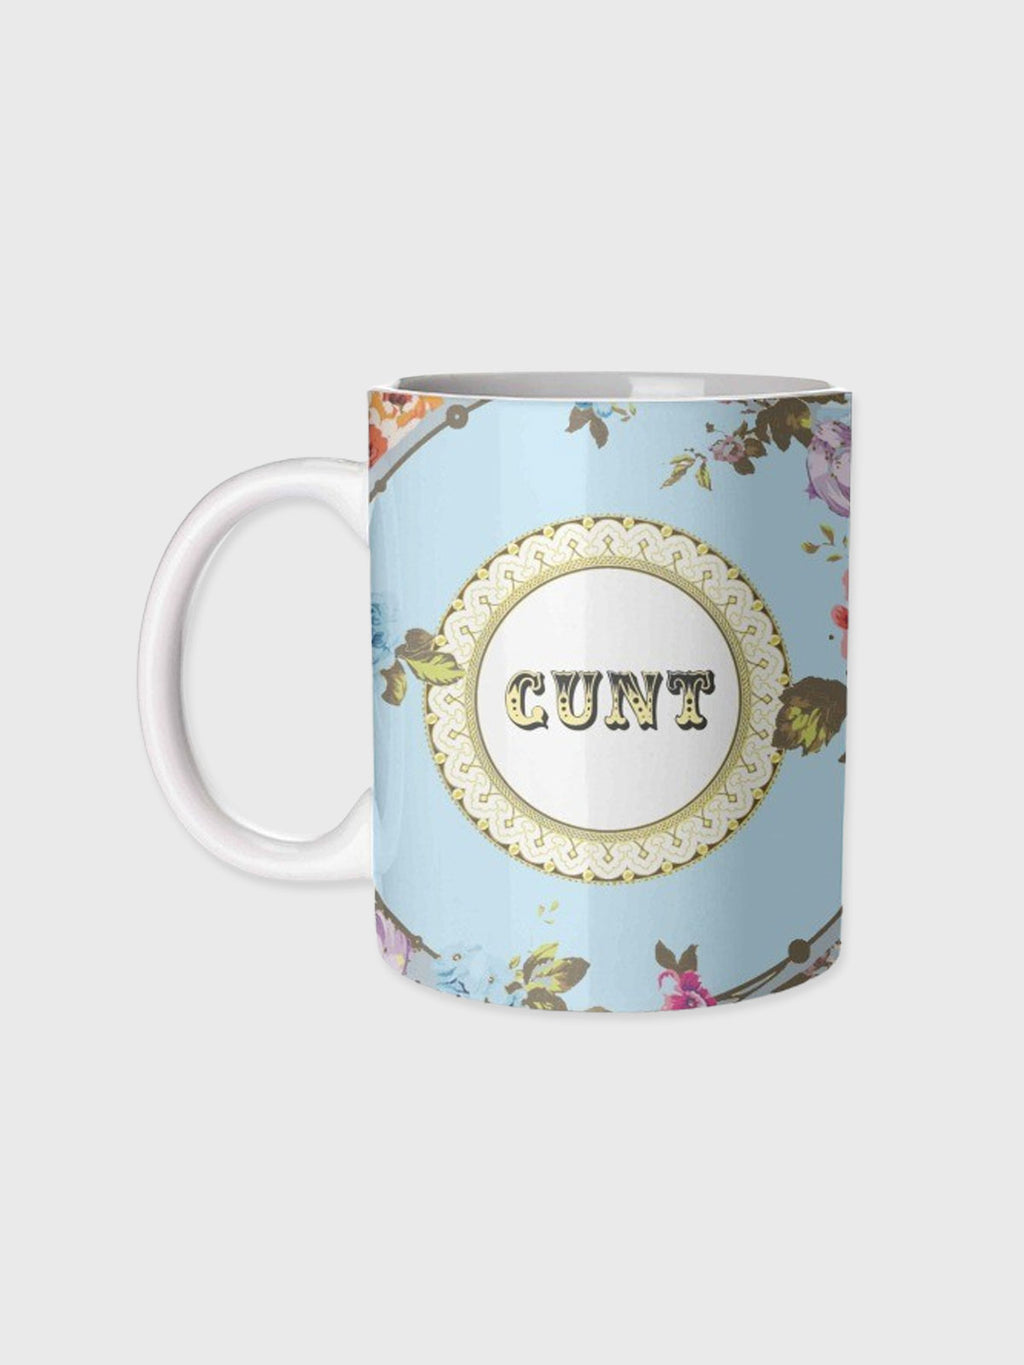 Cup / Mug - Cunt - Blue